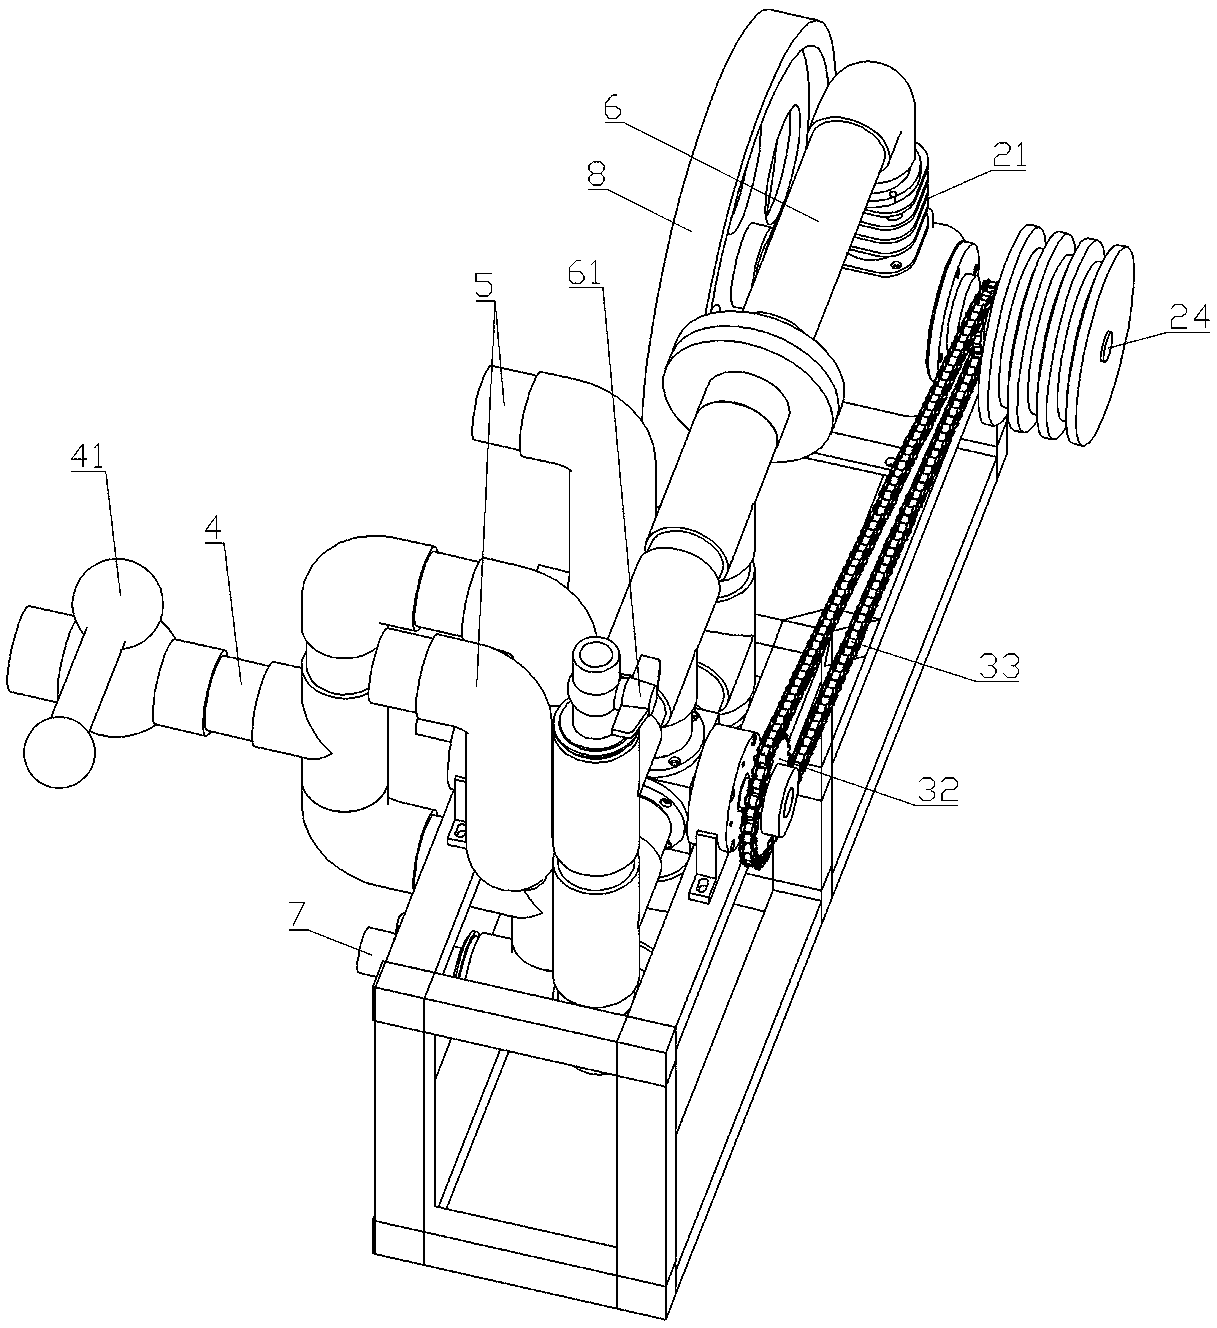 Hydraulic pressure engine based on reversing valve